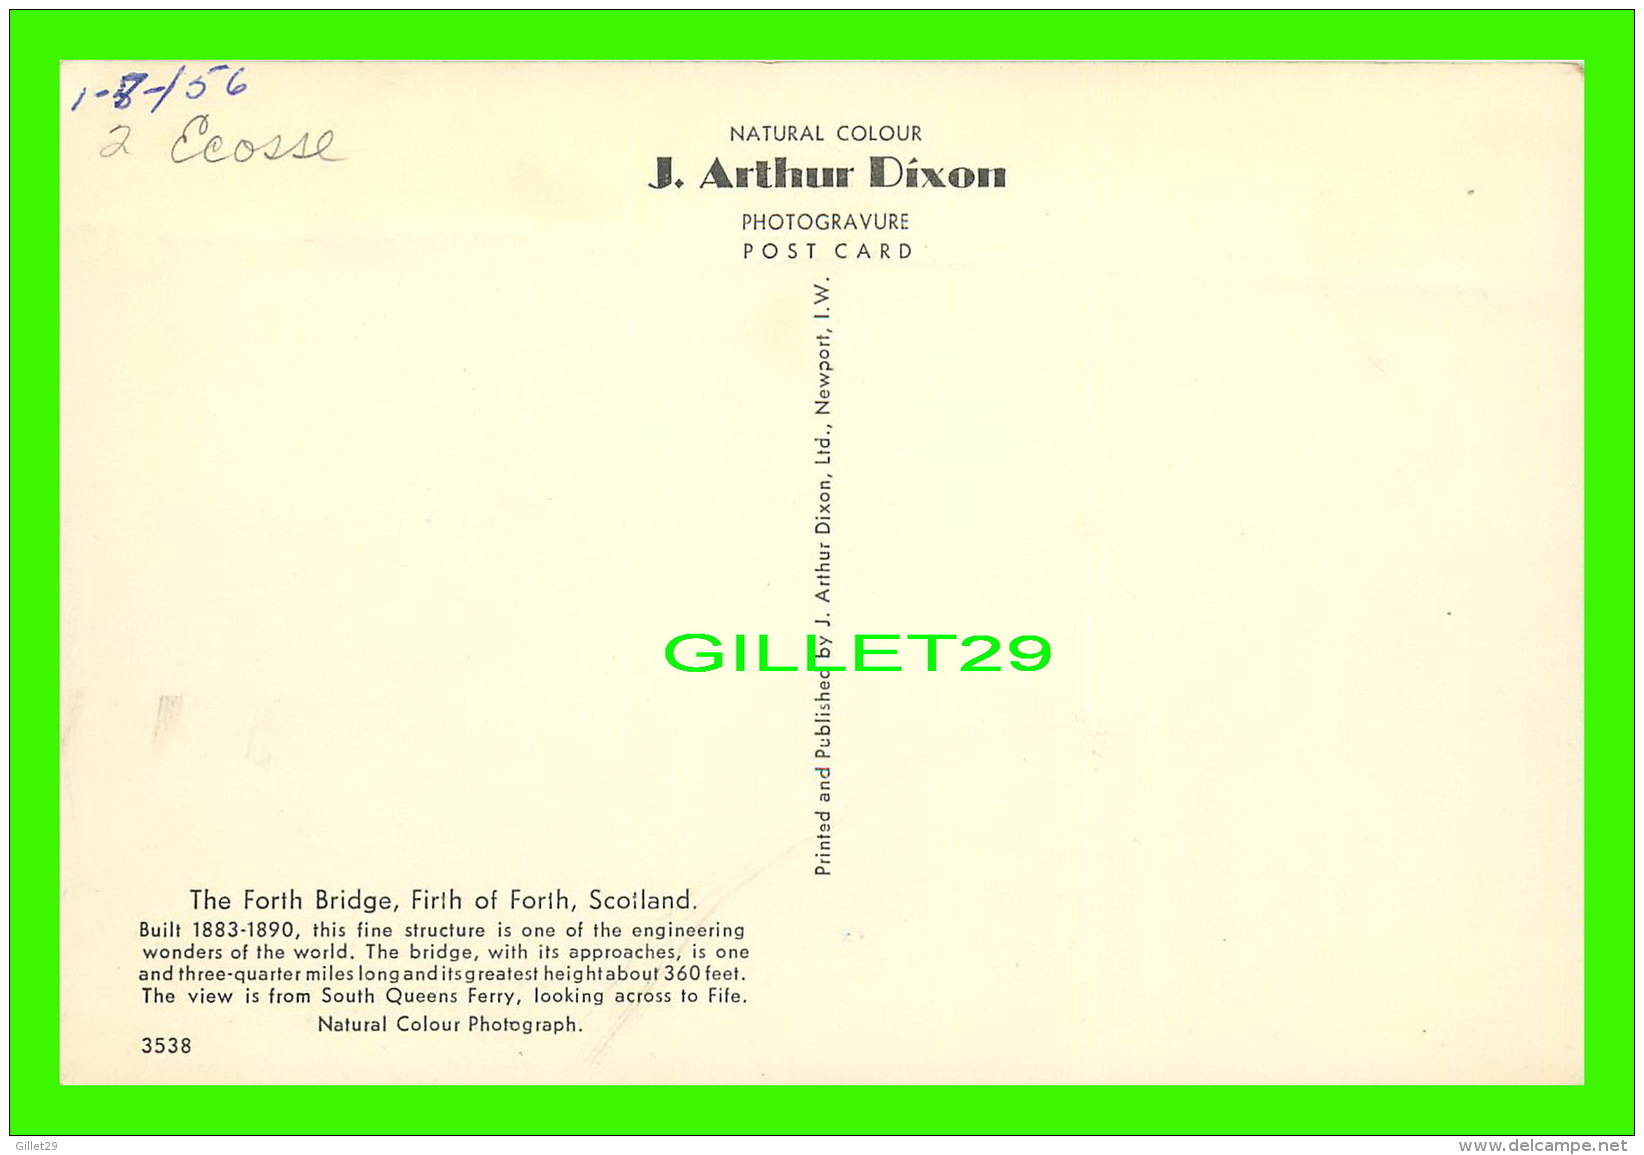 FIRTH OF FORTH, SCOTLAND - THE FORTH BRIDGE - J ARTHUR DIXON No 3538 - 1956 - - Fife